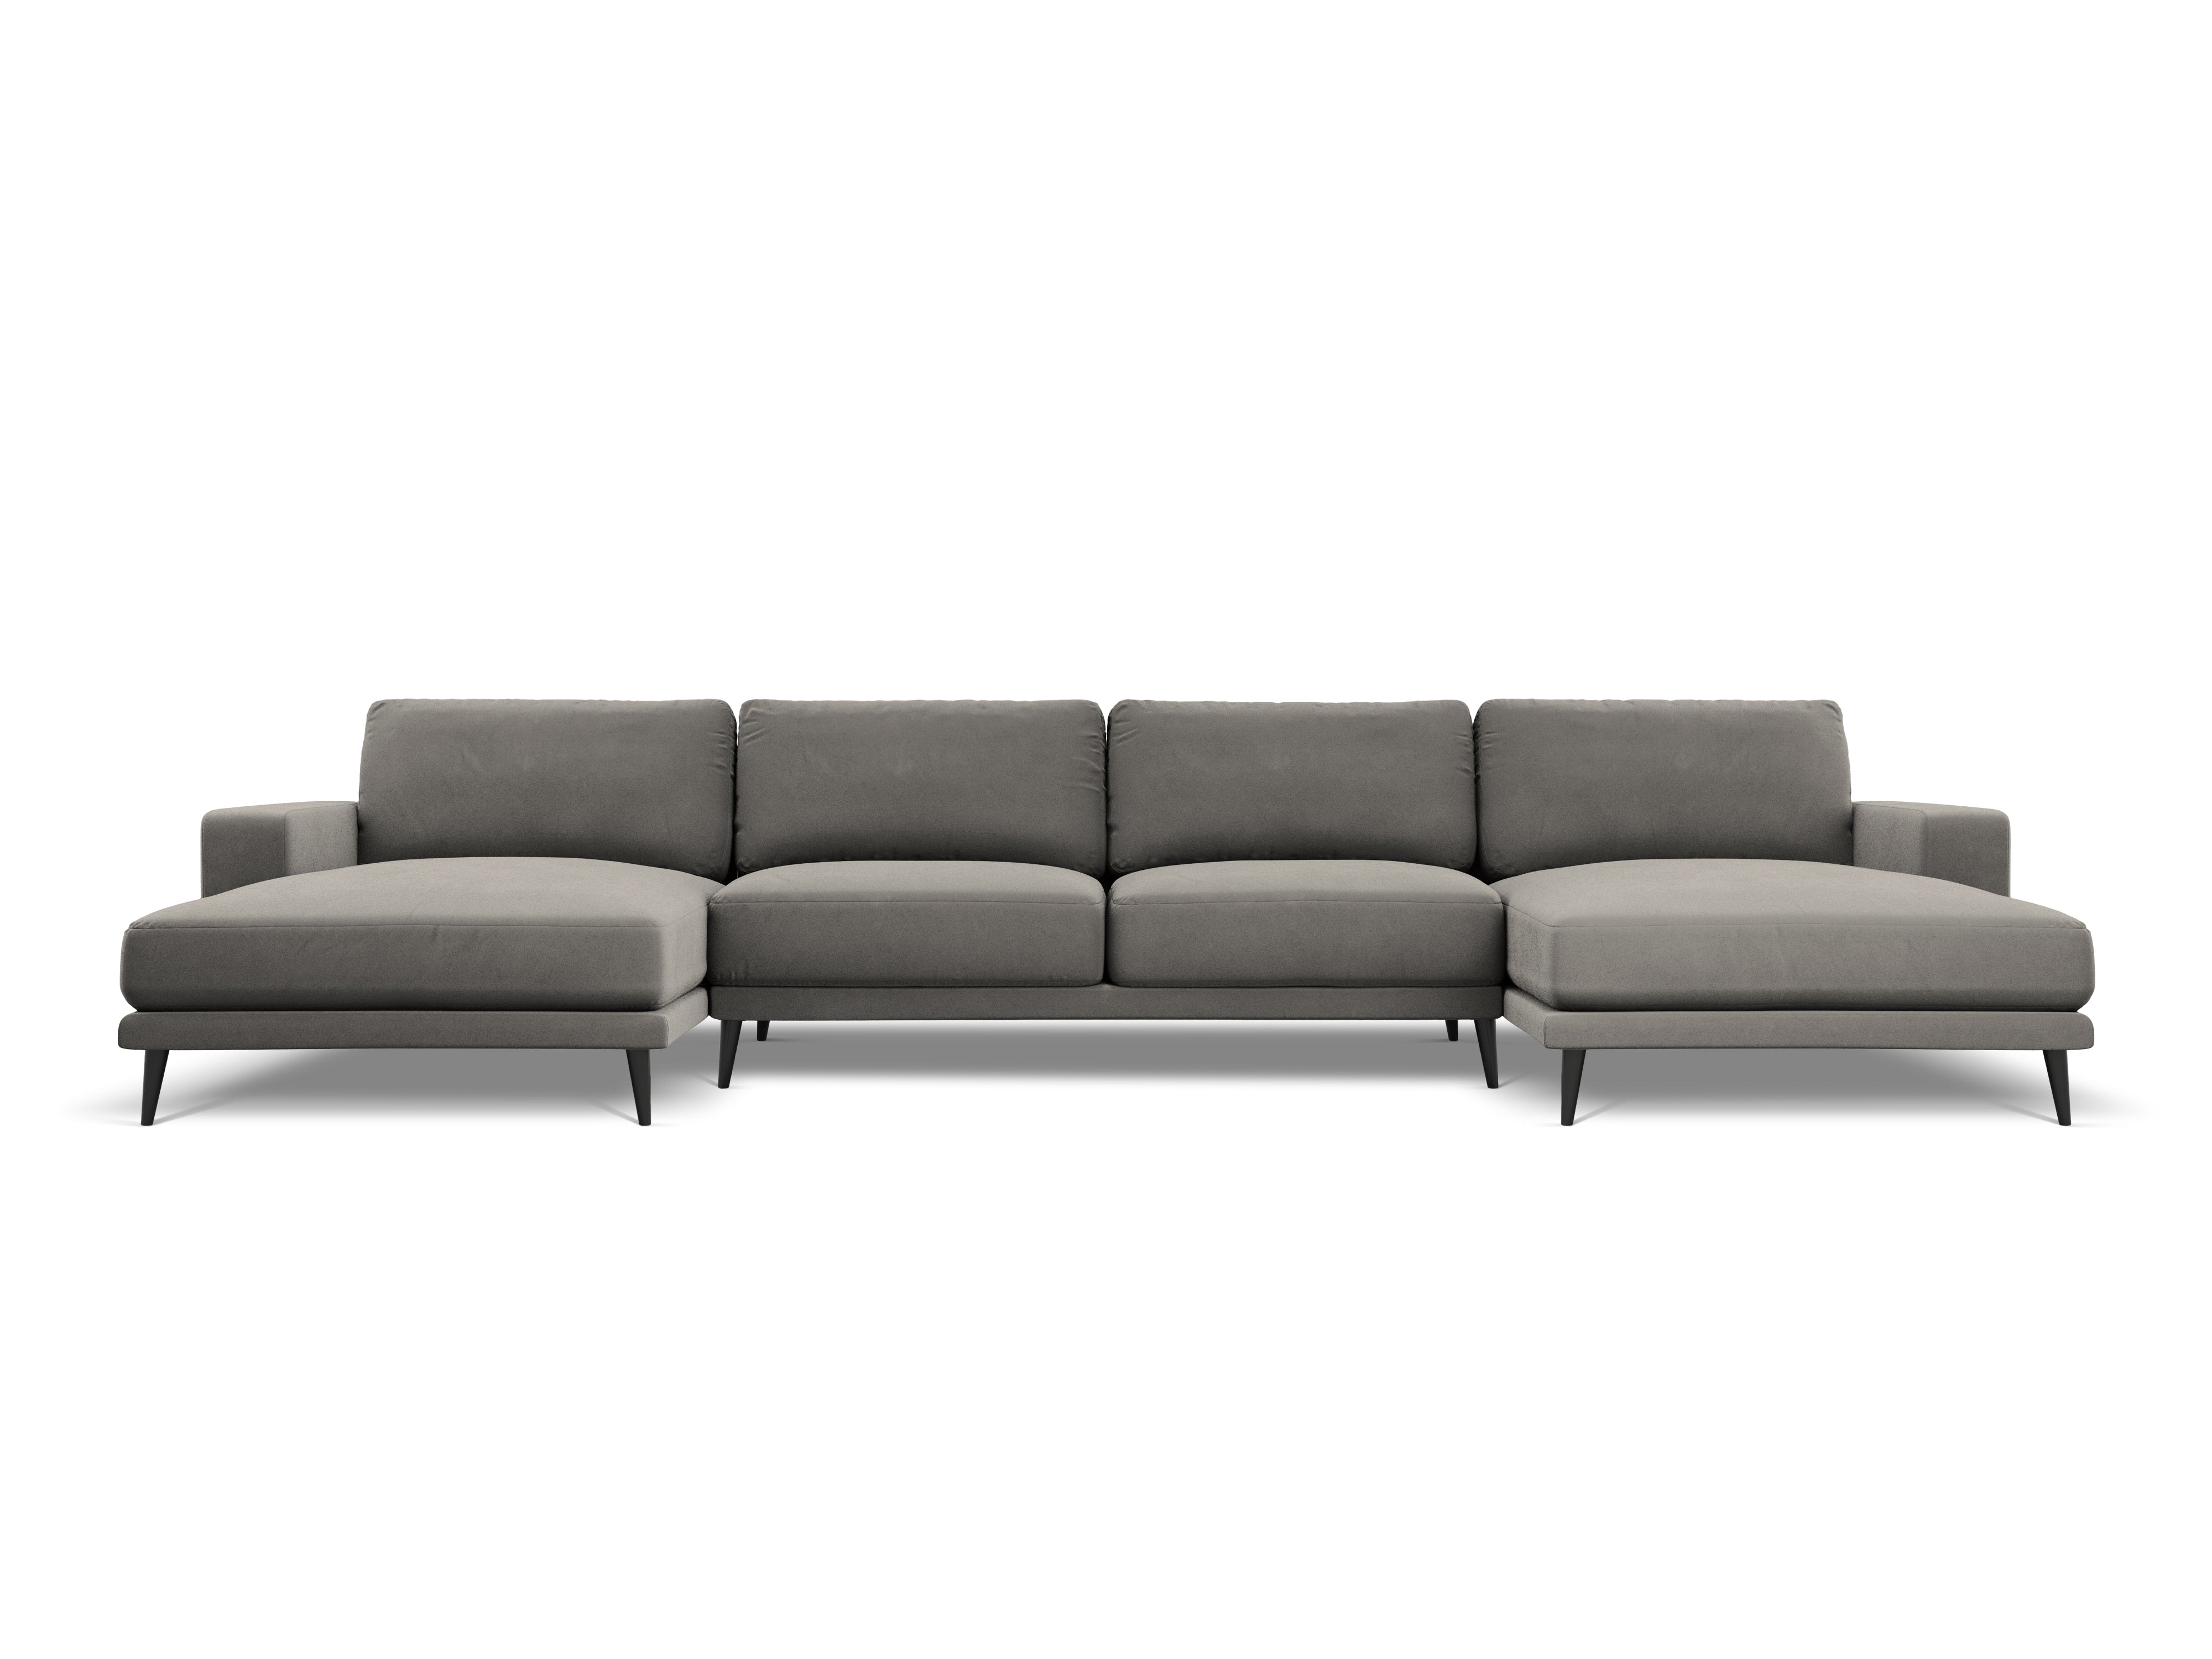 Velvet Panoramic Sofa, "Kylie", 6 Seats, 302x160x80
Made in Europe, Micadoni, Eye on Design